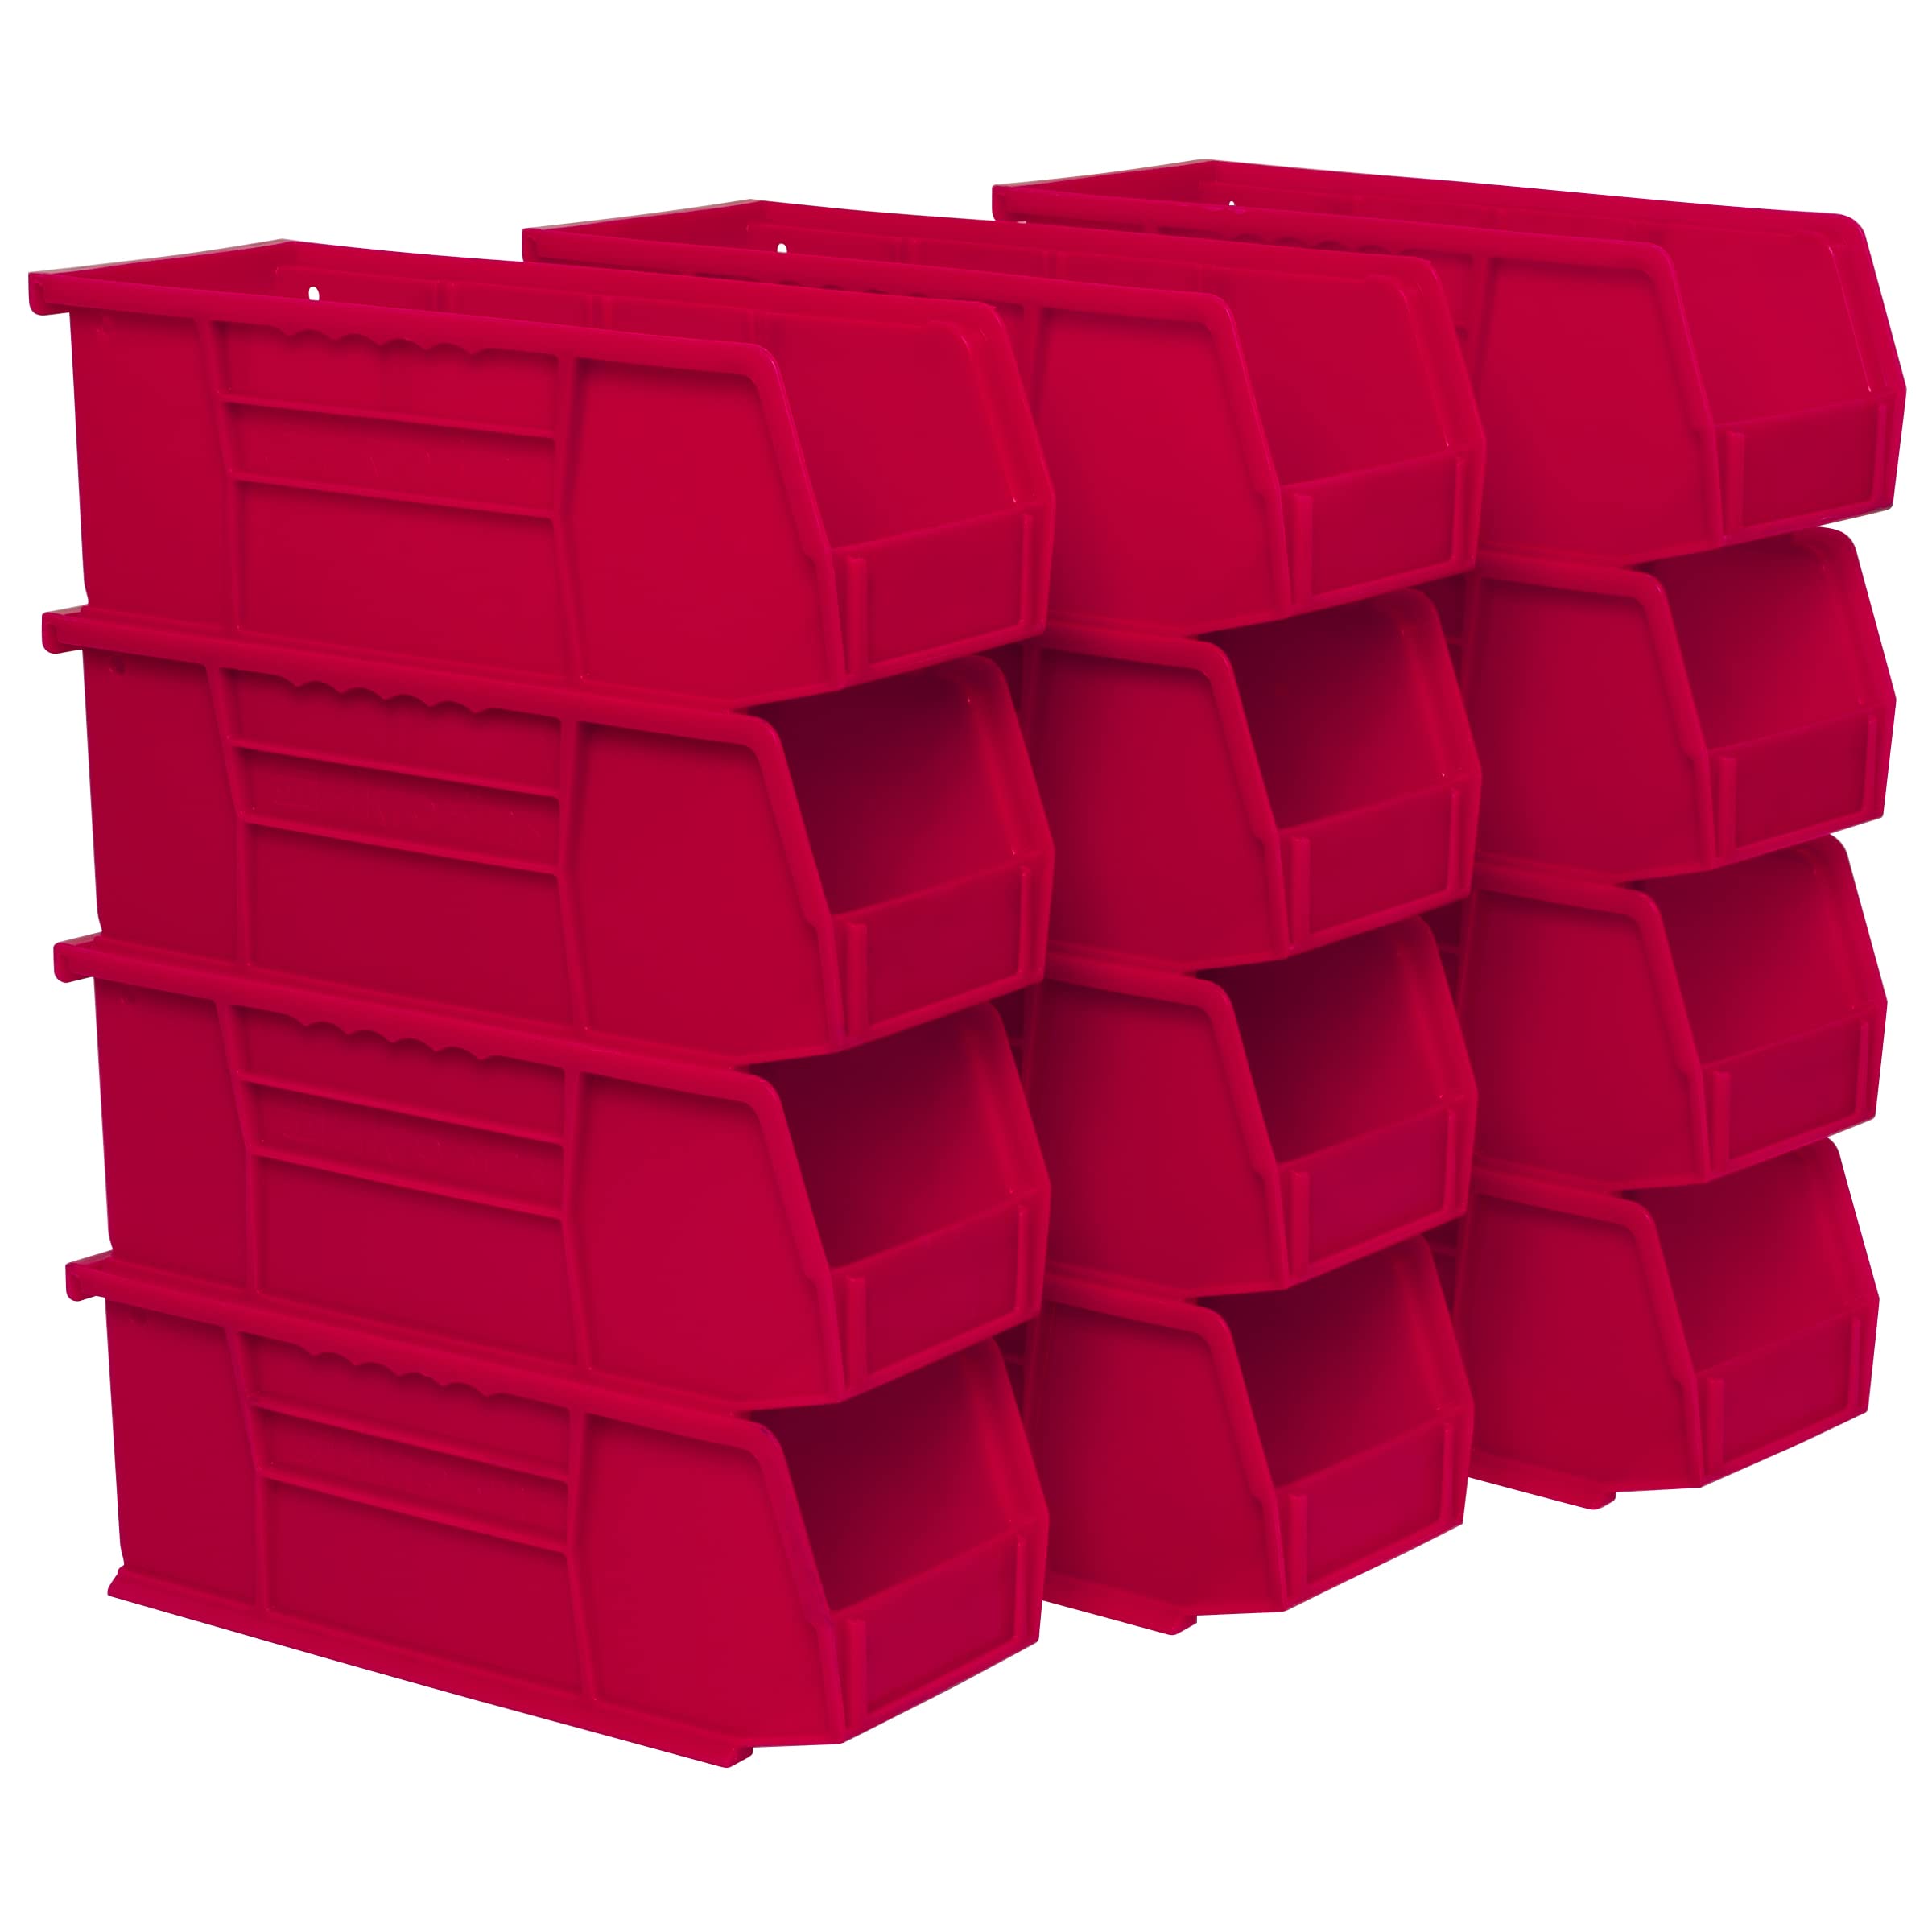 Akro-Mils 30224 AkroBins Plastic Hanging Stackable Storage Organizer Bin, 11-Inch x 4-Inch x 4-Inch, Red, 12-Pack